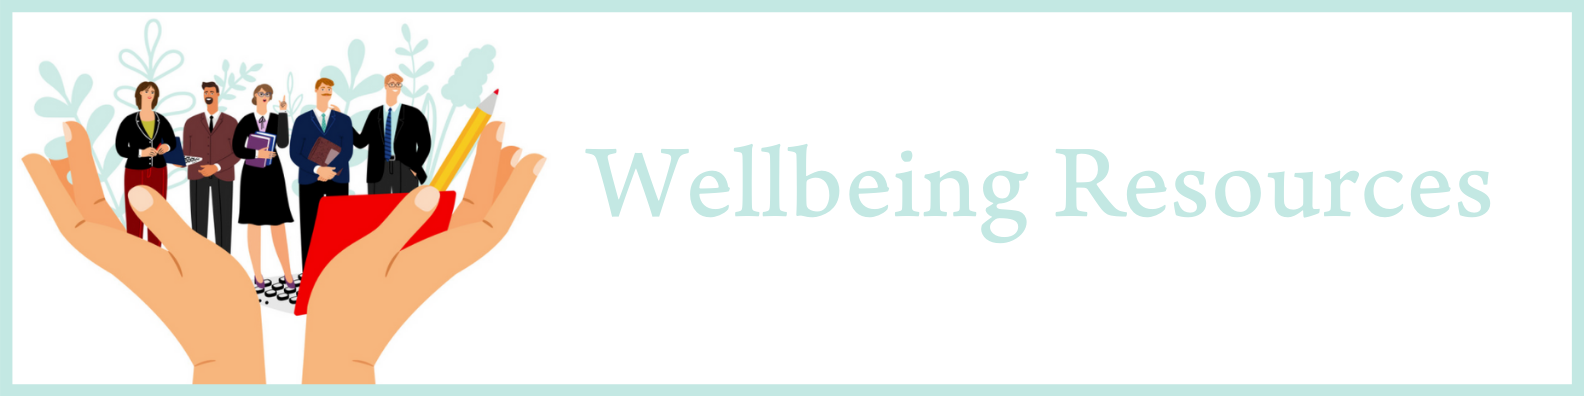 Wellbeing Resources Banner